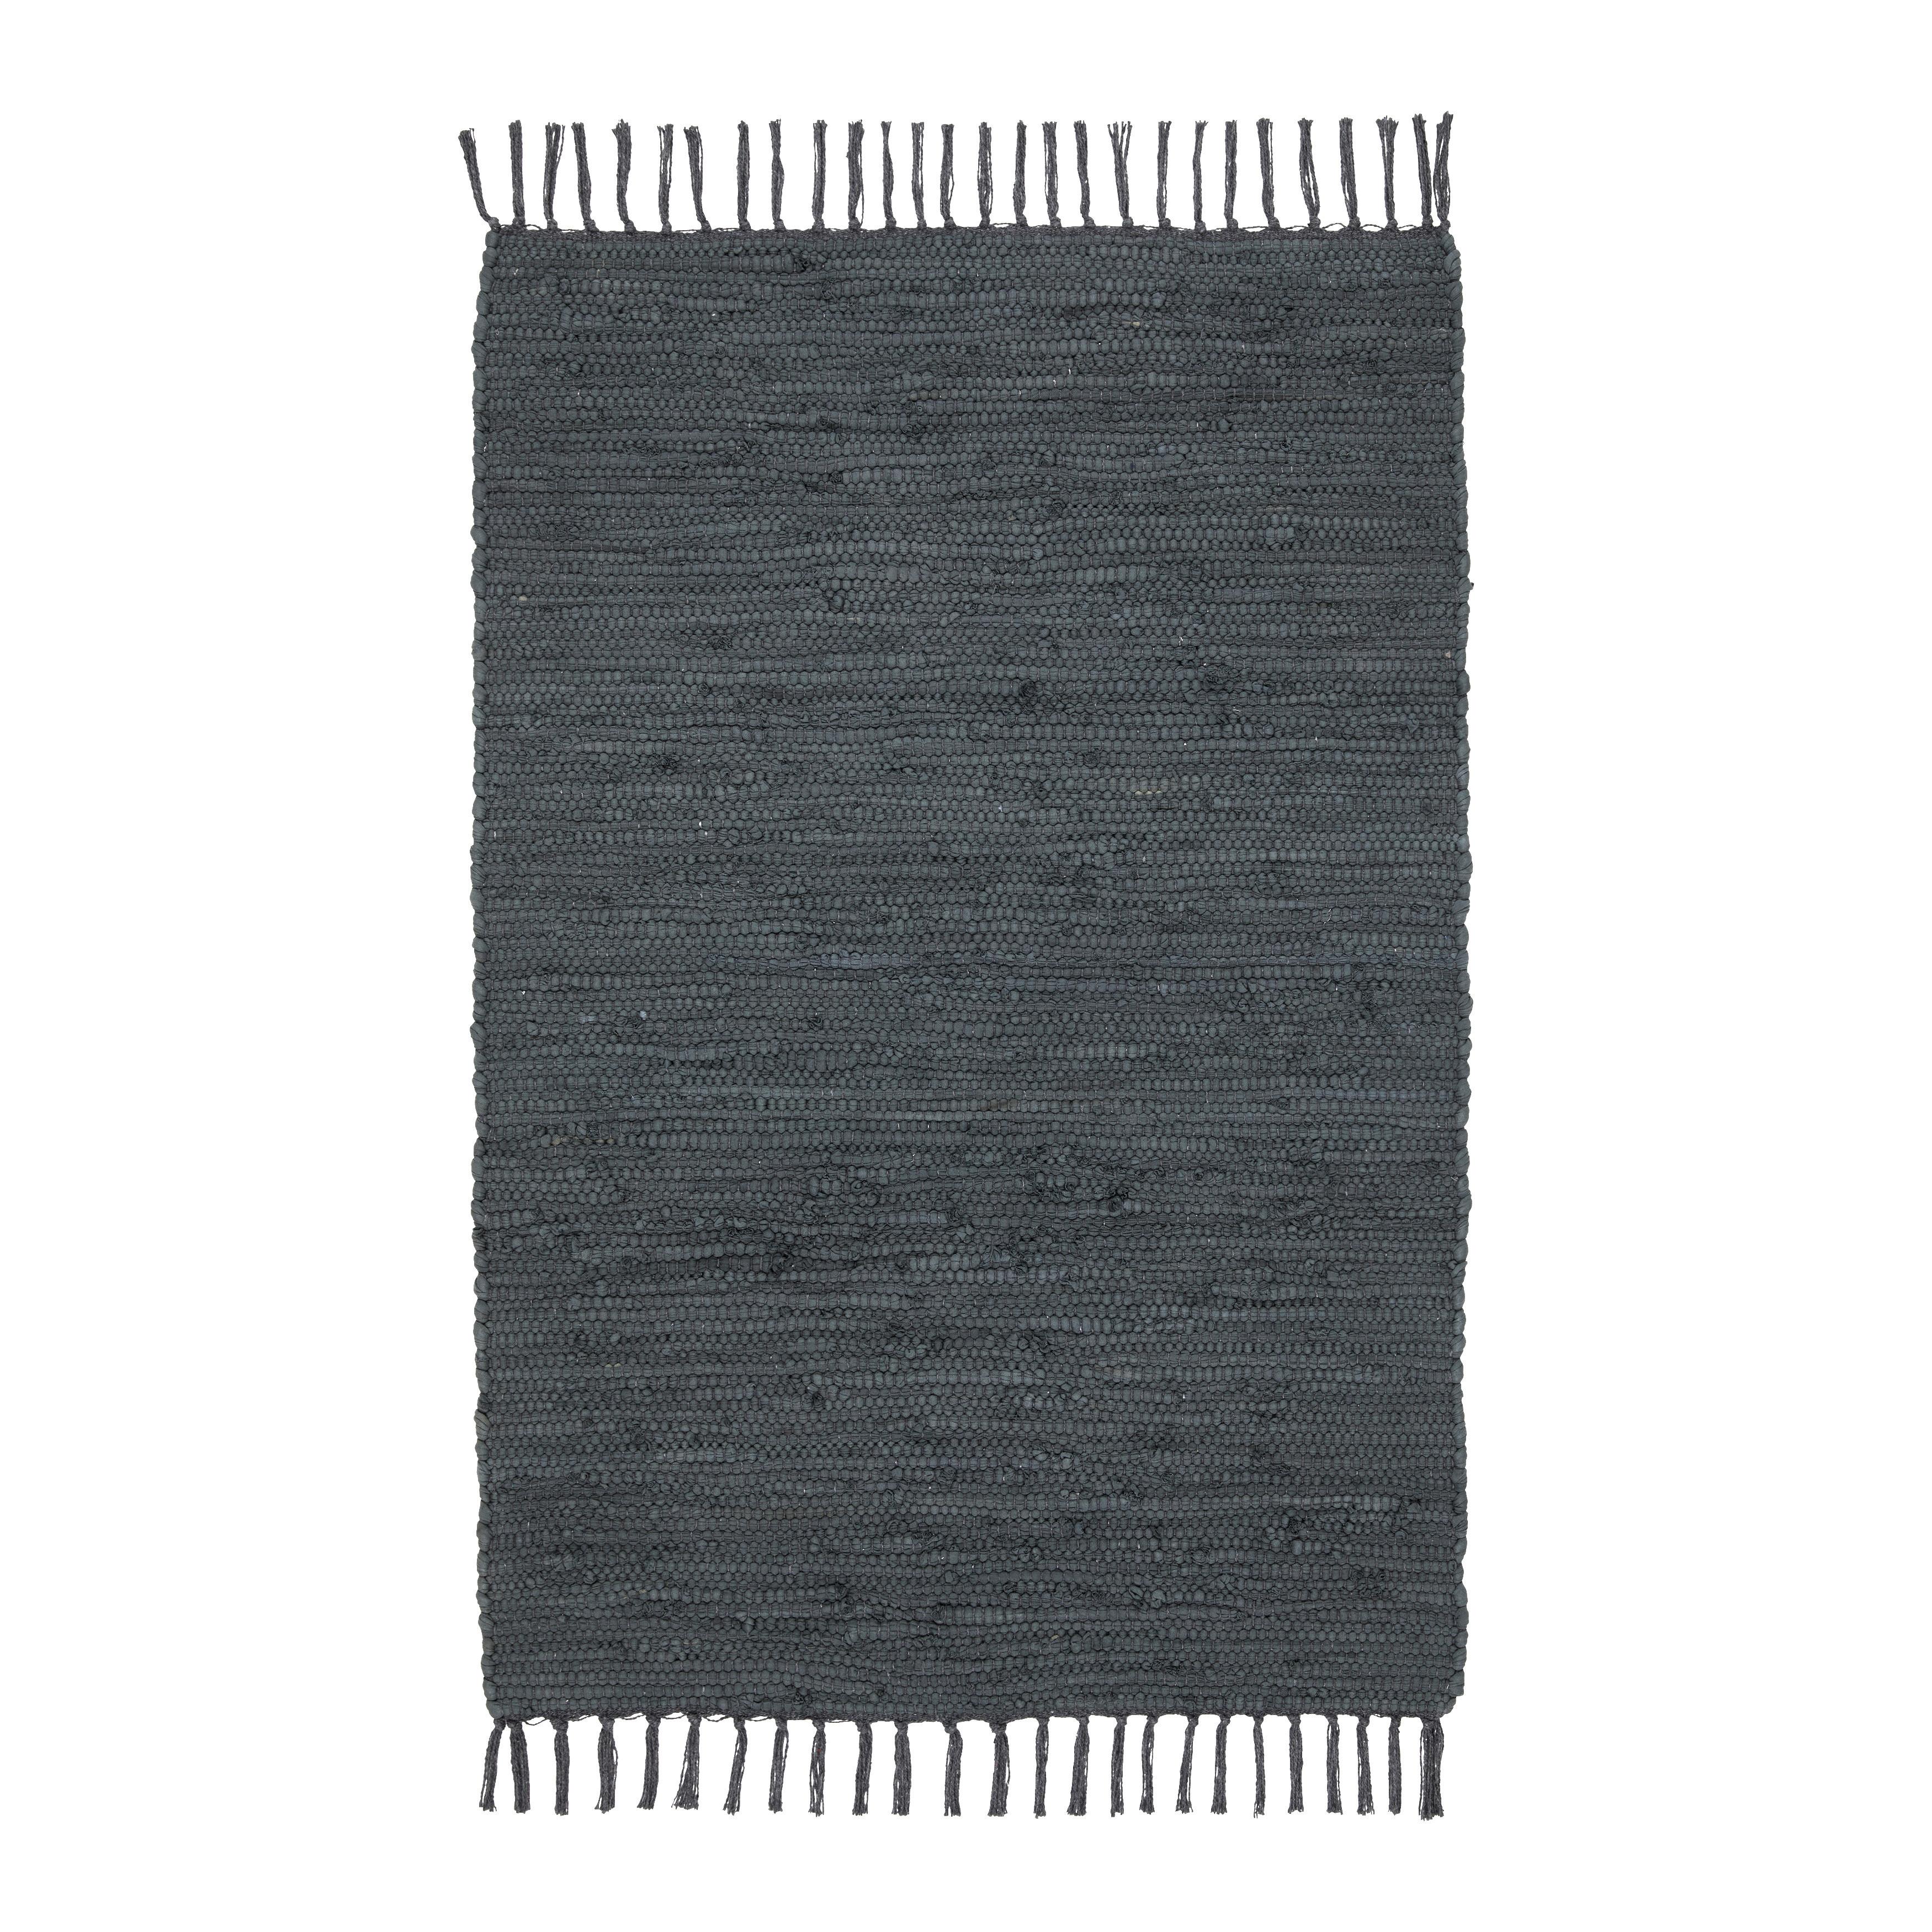 PREPROGA IZ KRP JULIA 2 - temno siva, Romantika, tekstil (70/130cm) - Modern Living